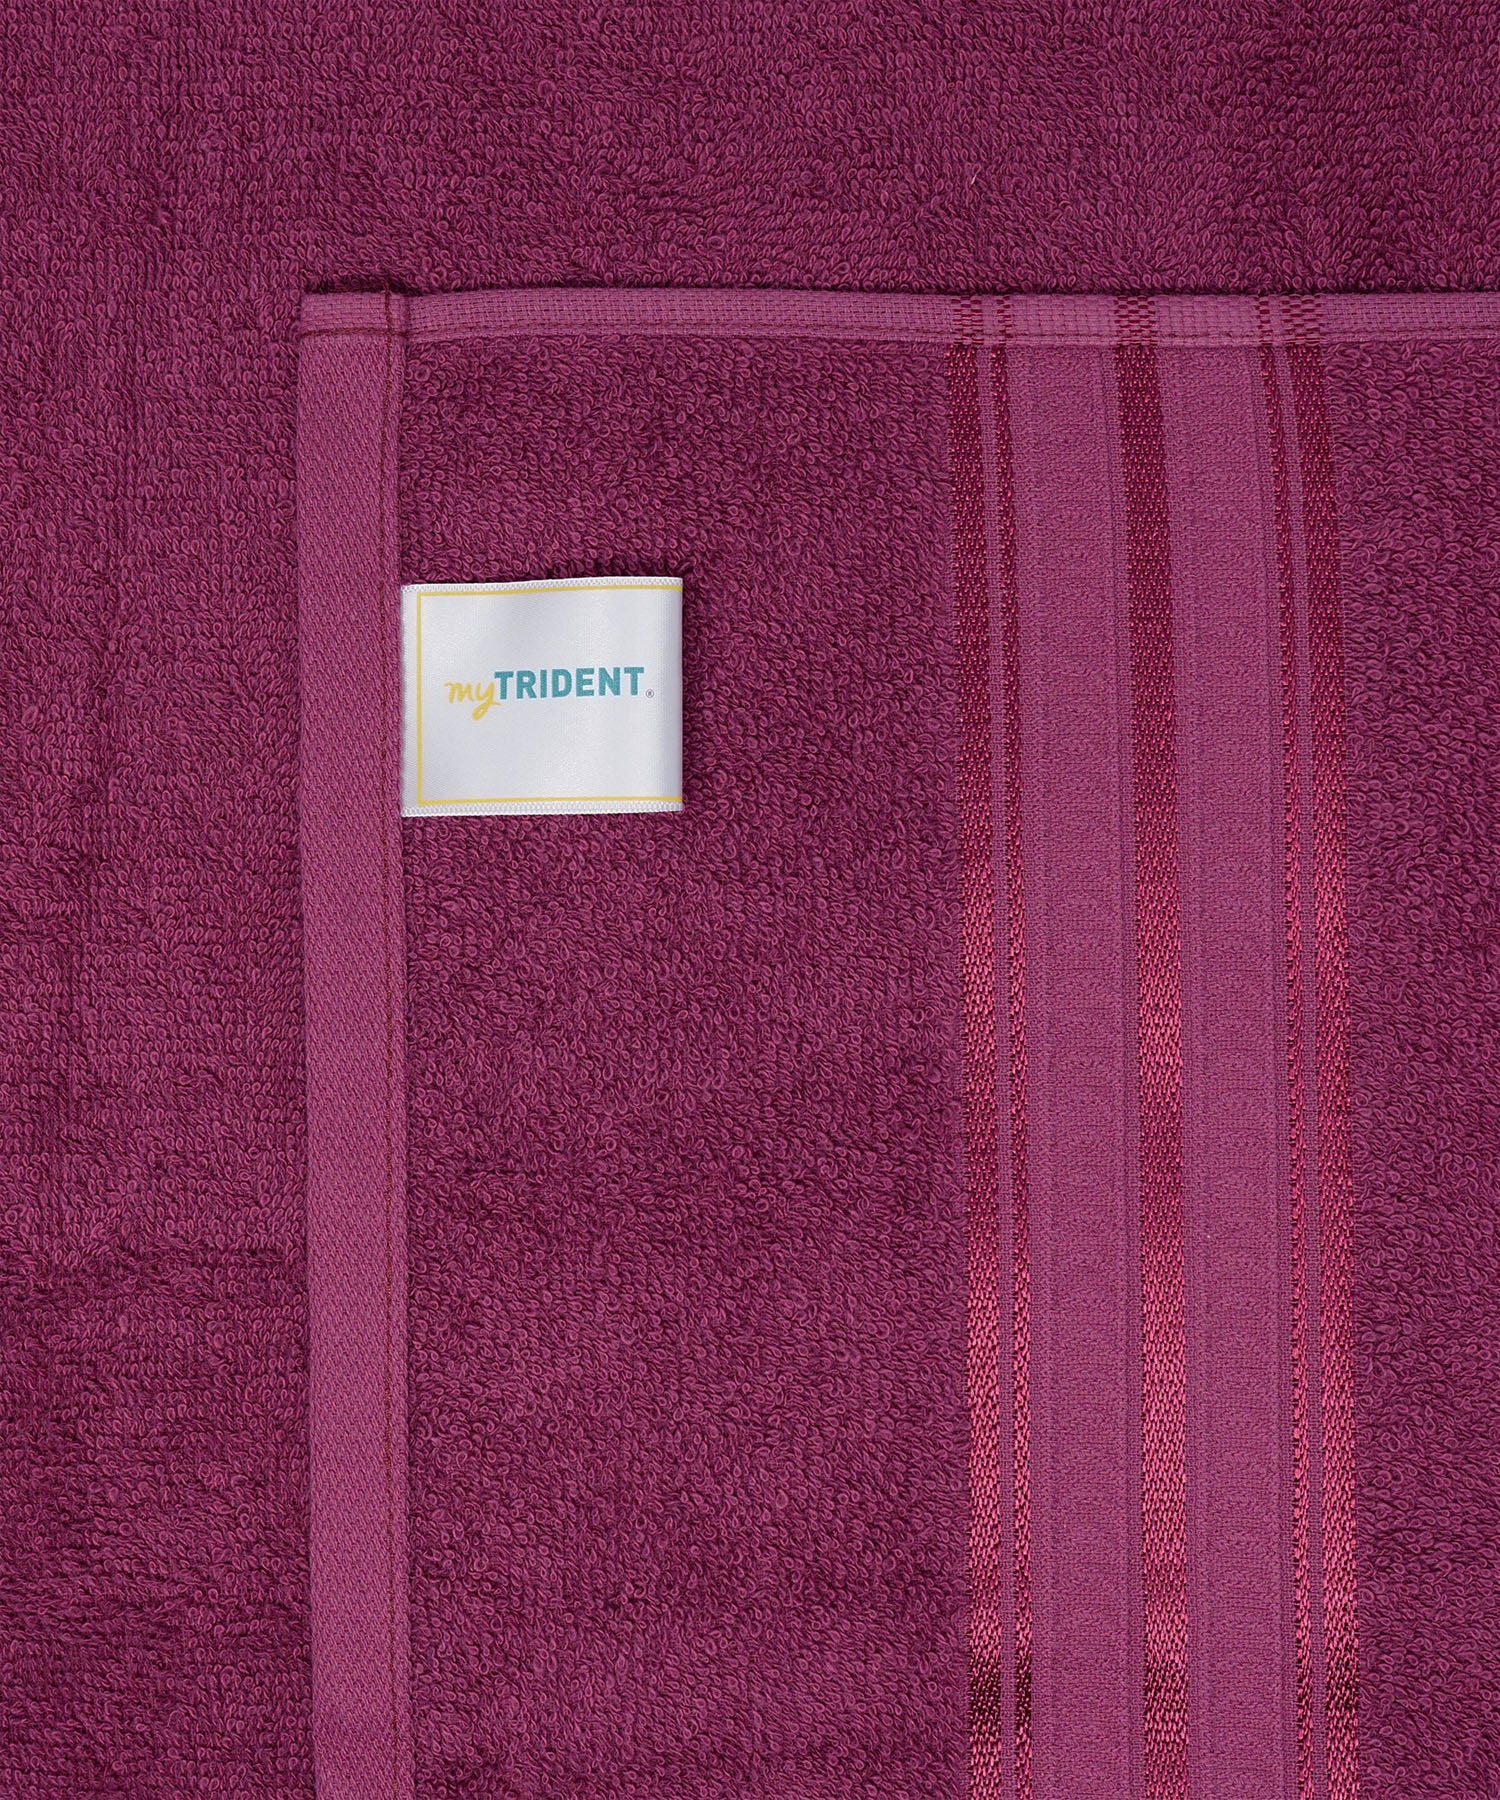 4Pc Towel Set ₹1199/-